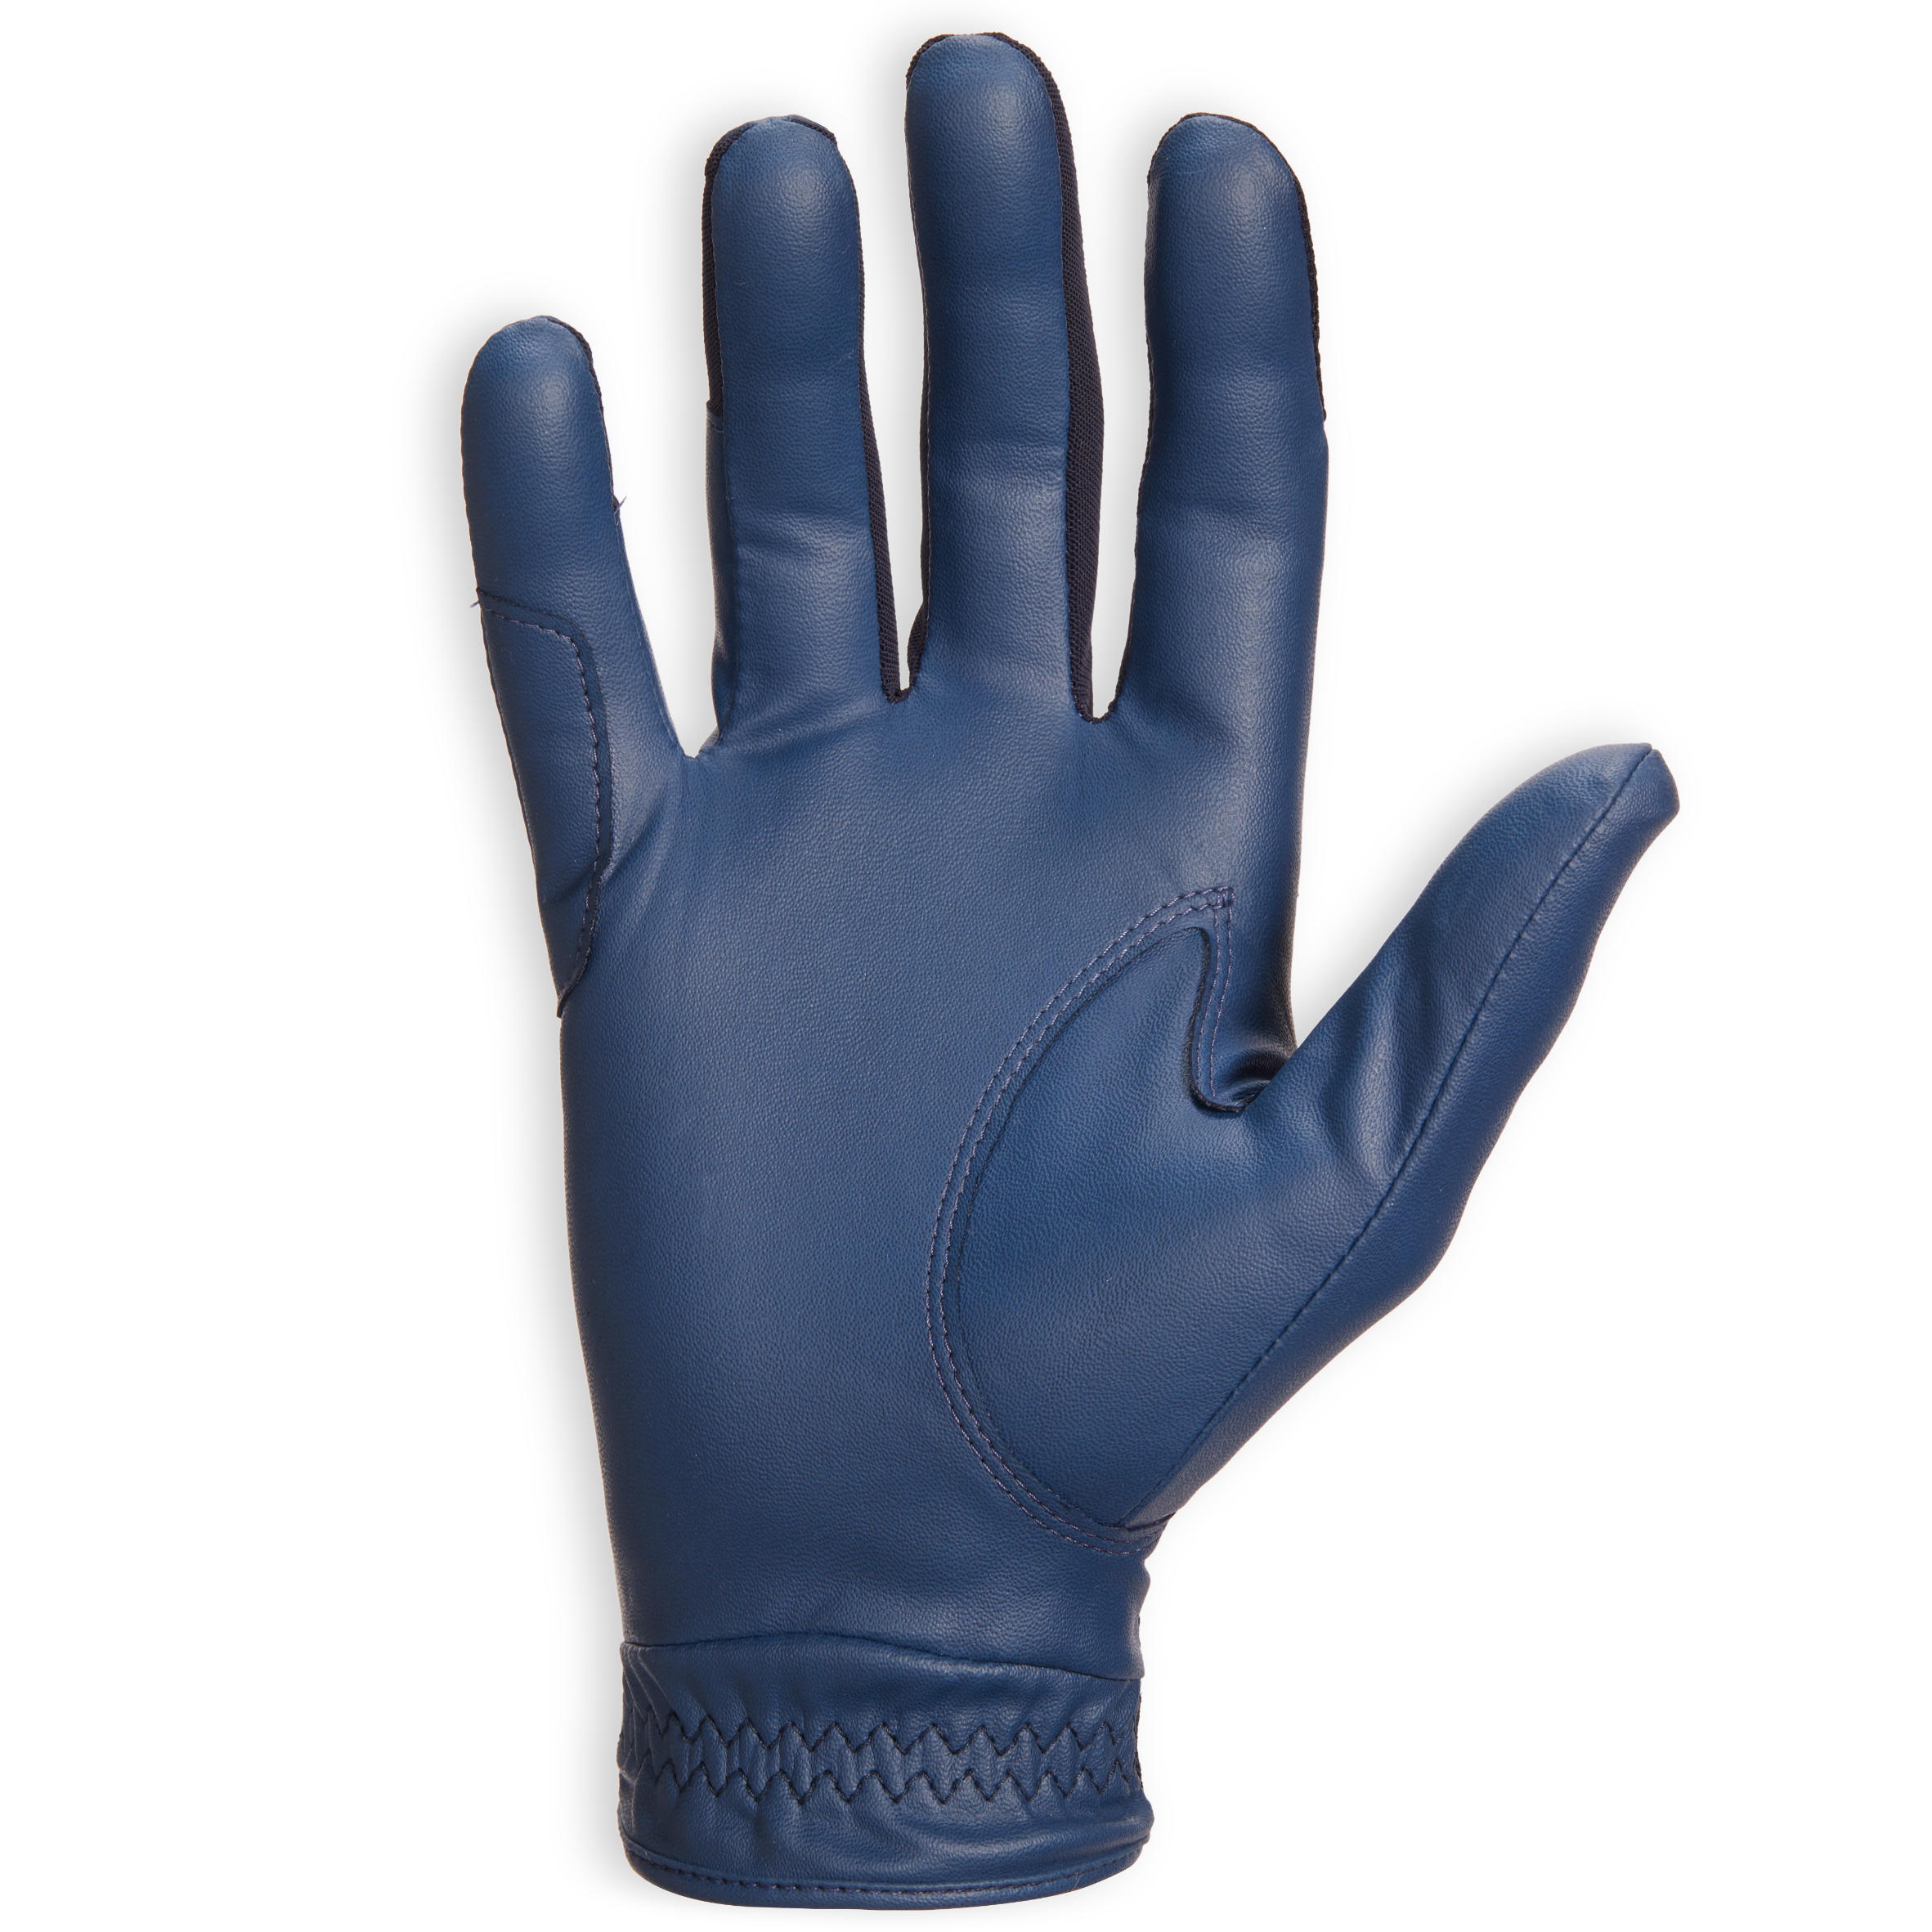 560 Horse Riding Gloves - Navy/Blue 2/7